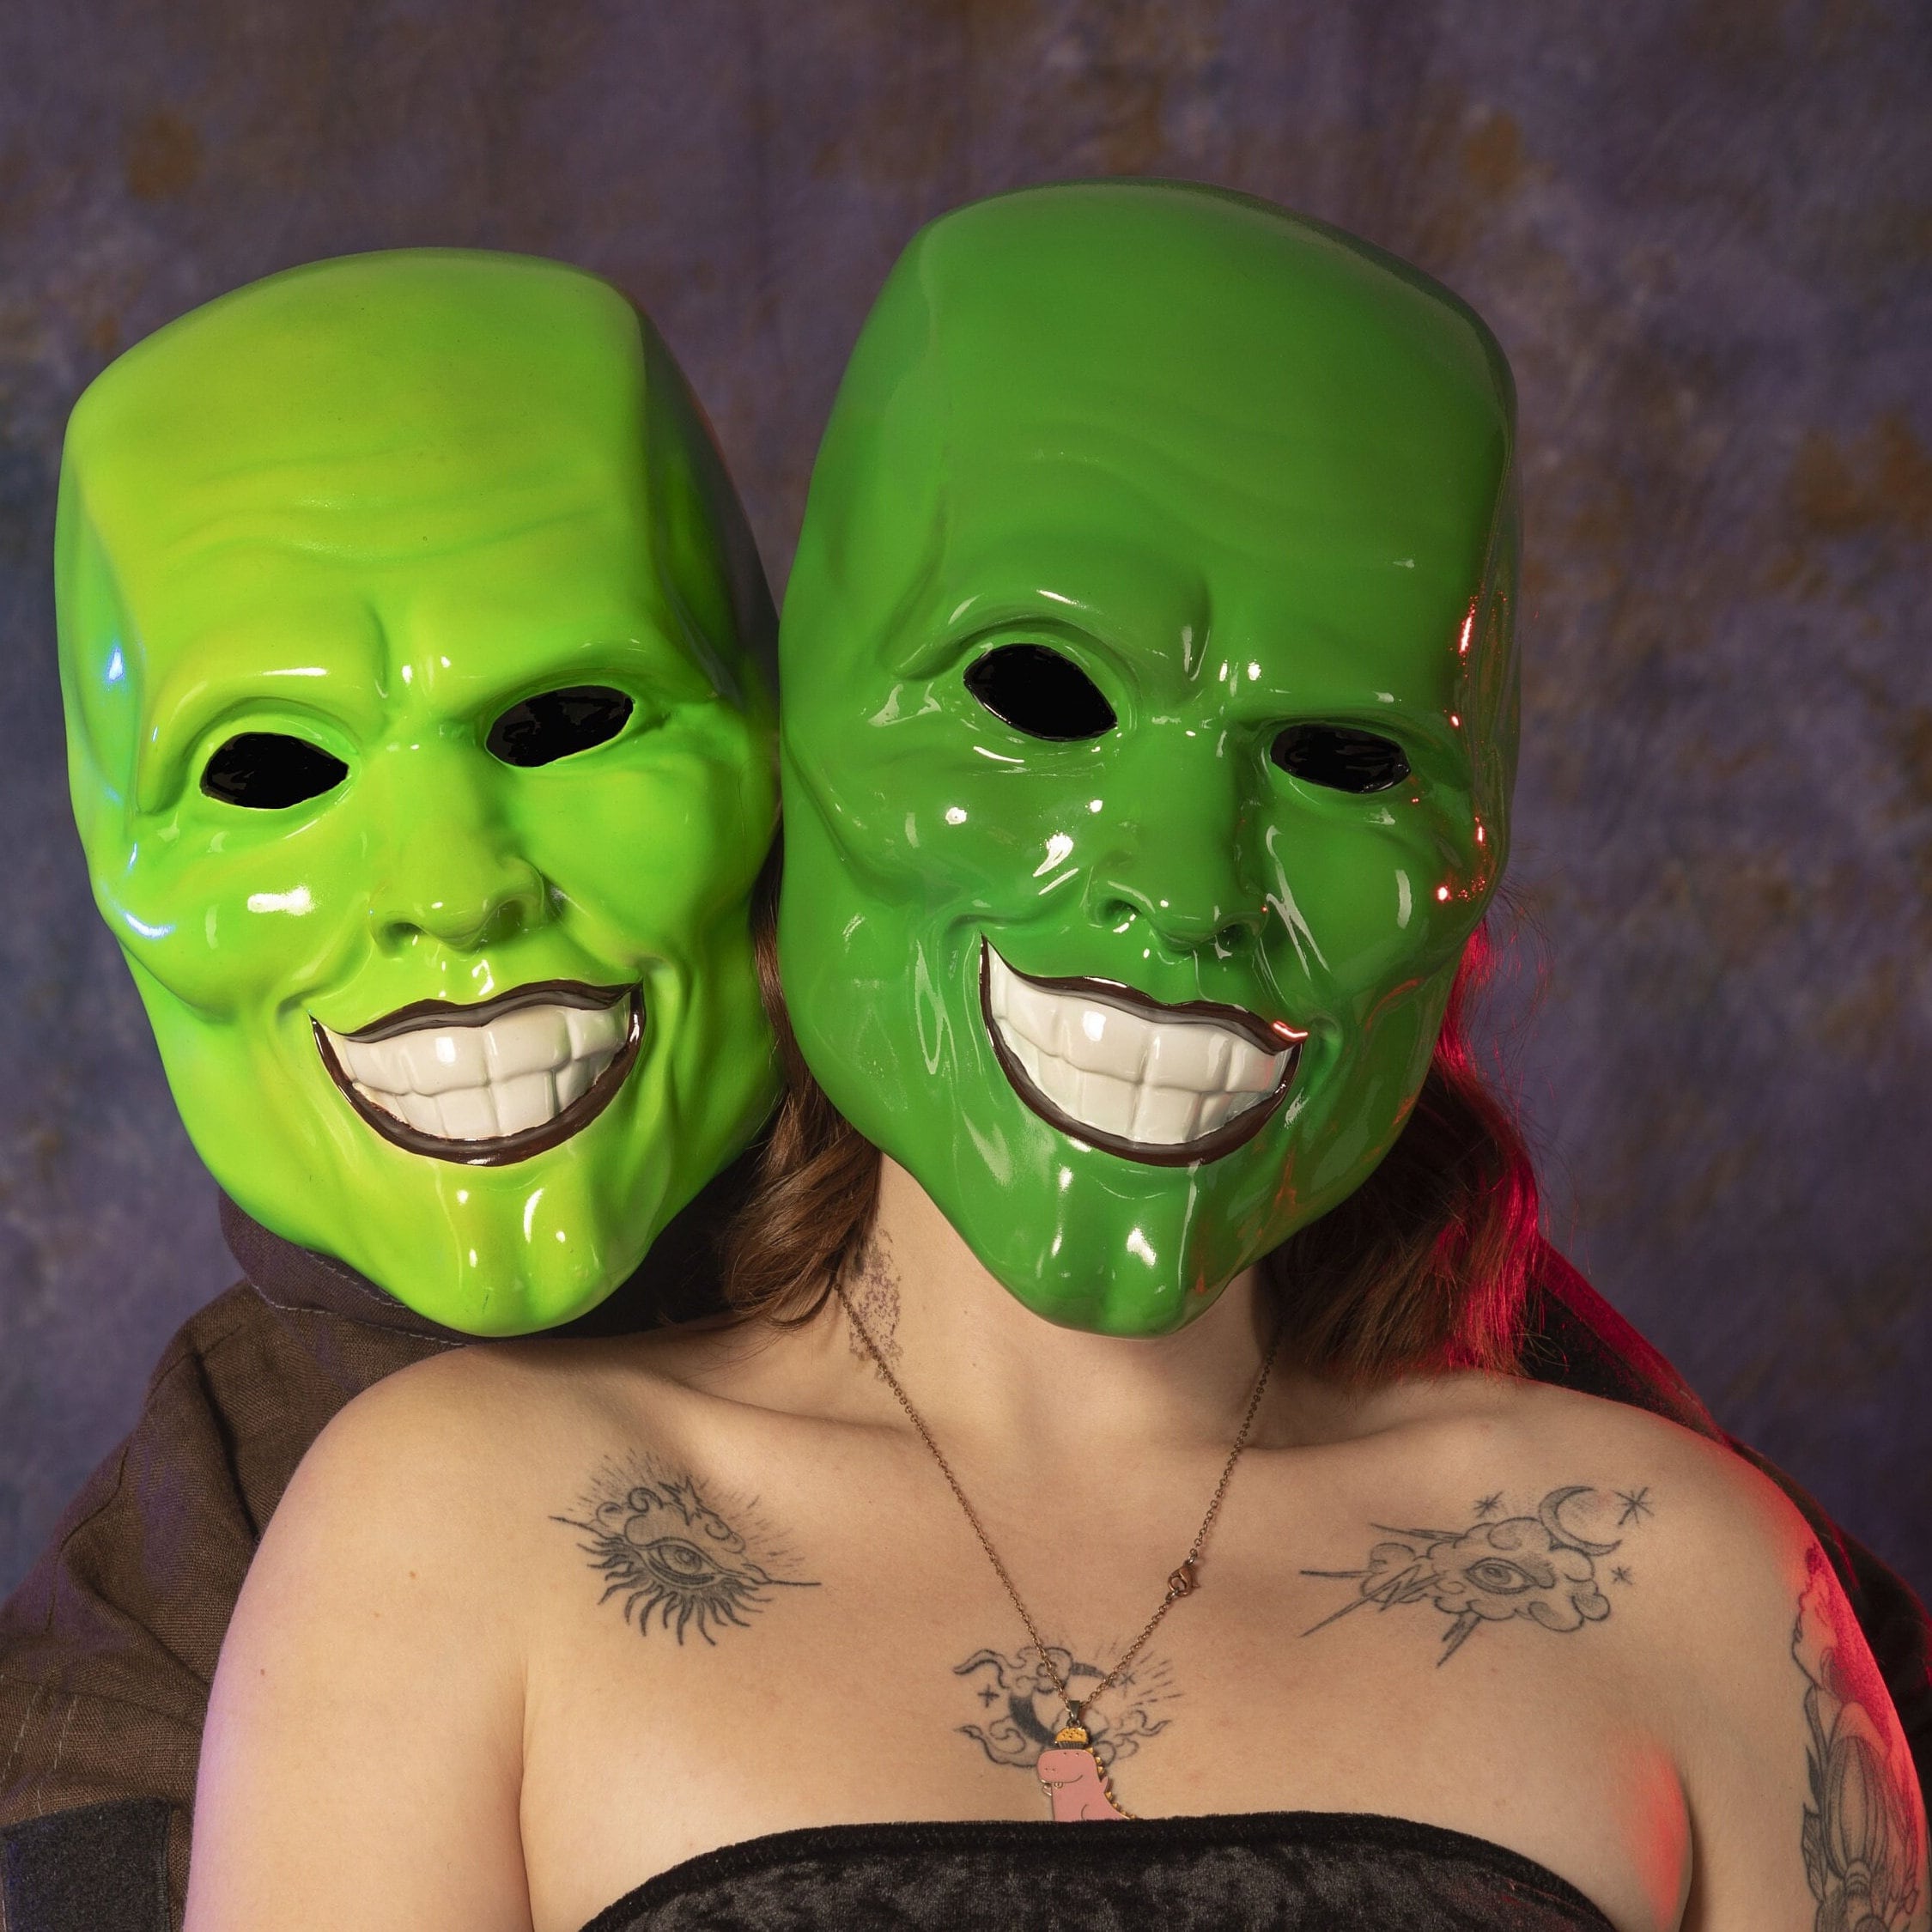 Llavero The Mask Mascara Jim Carrey Metal Dorado